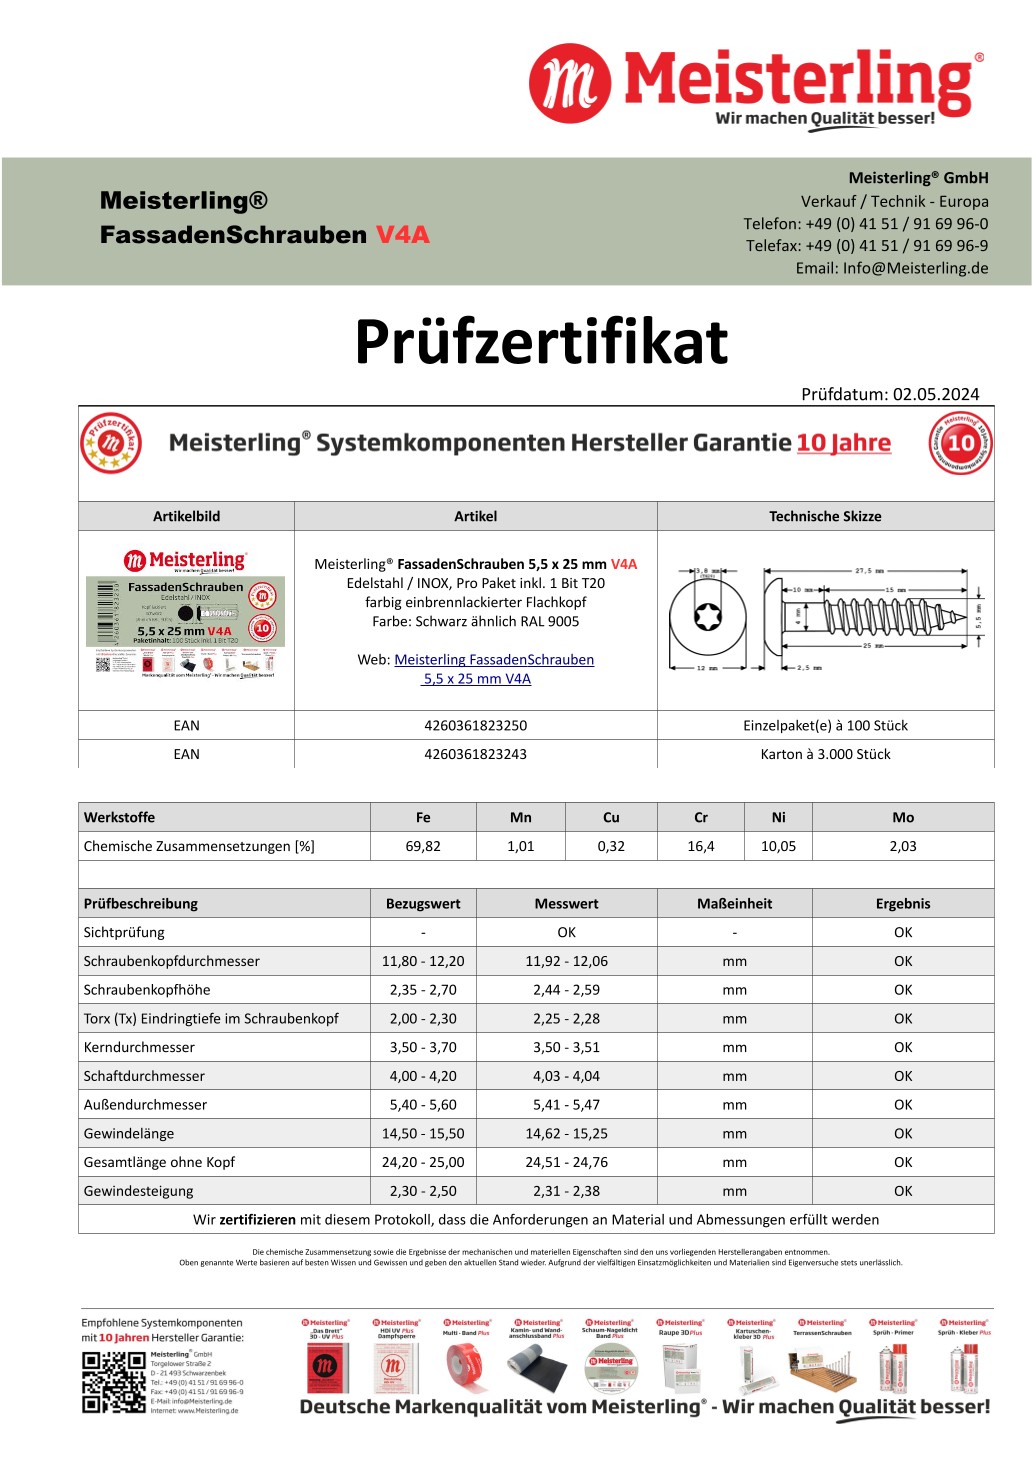 Prüfzertifikat Meisterling® FassadenSchrauben 5,5 x 25 mm V4a schwarz